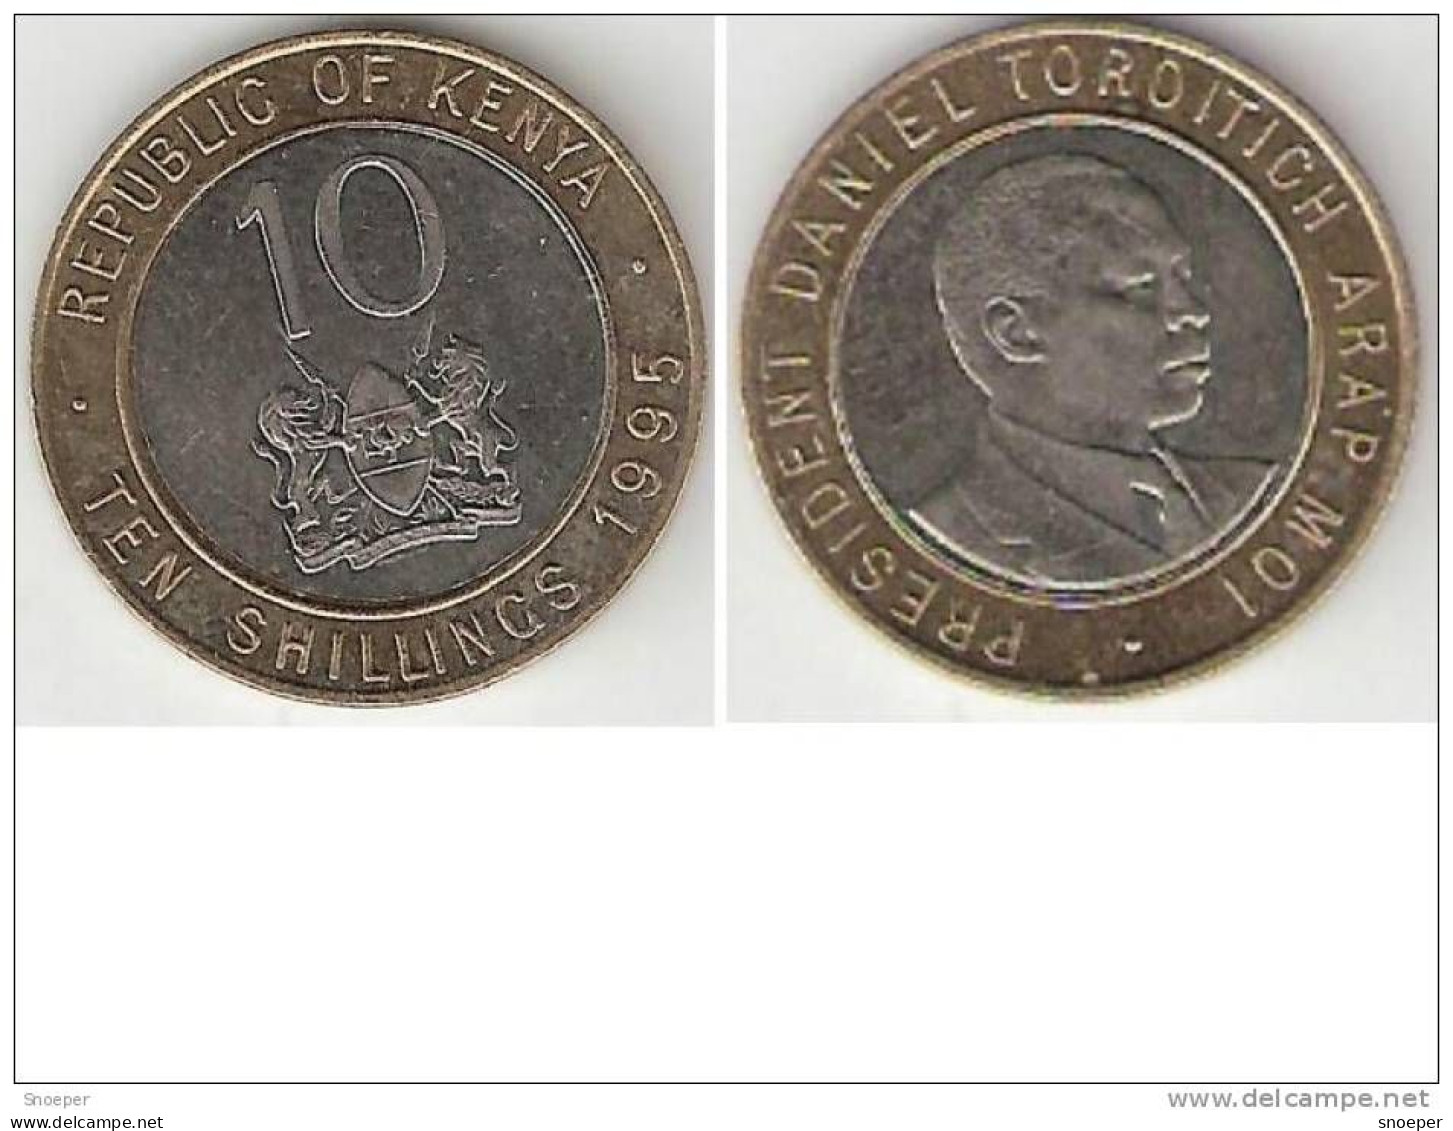 Kenya 10 Shilling 1995 Km 27 Xf+ - Kenya